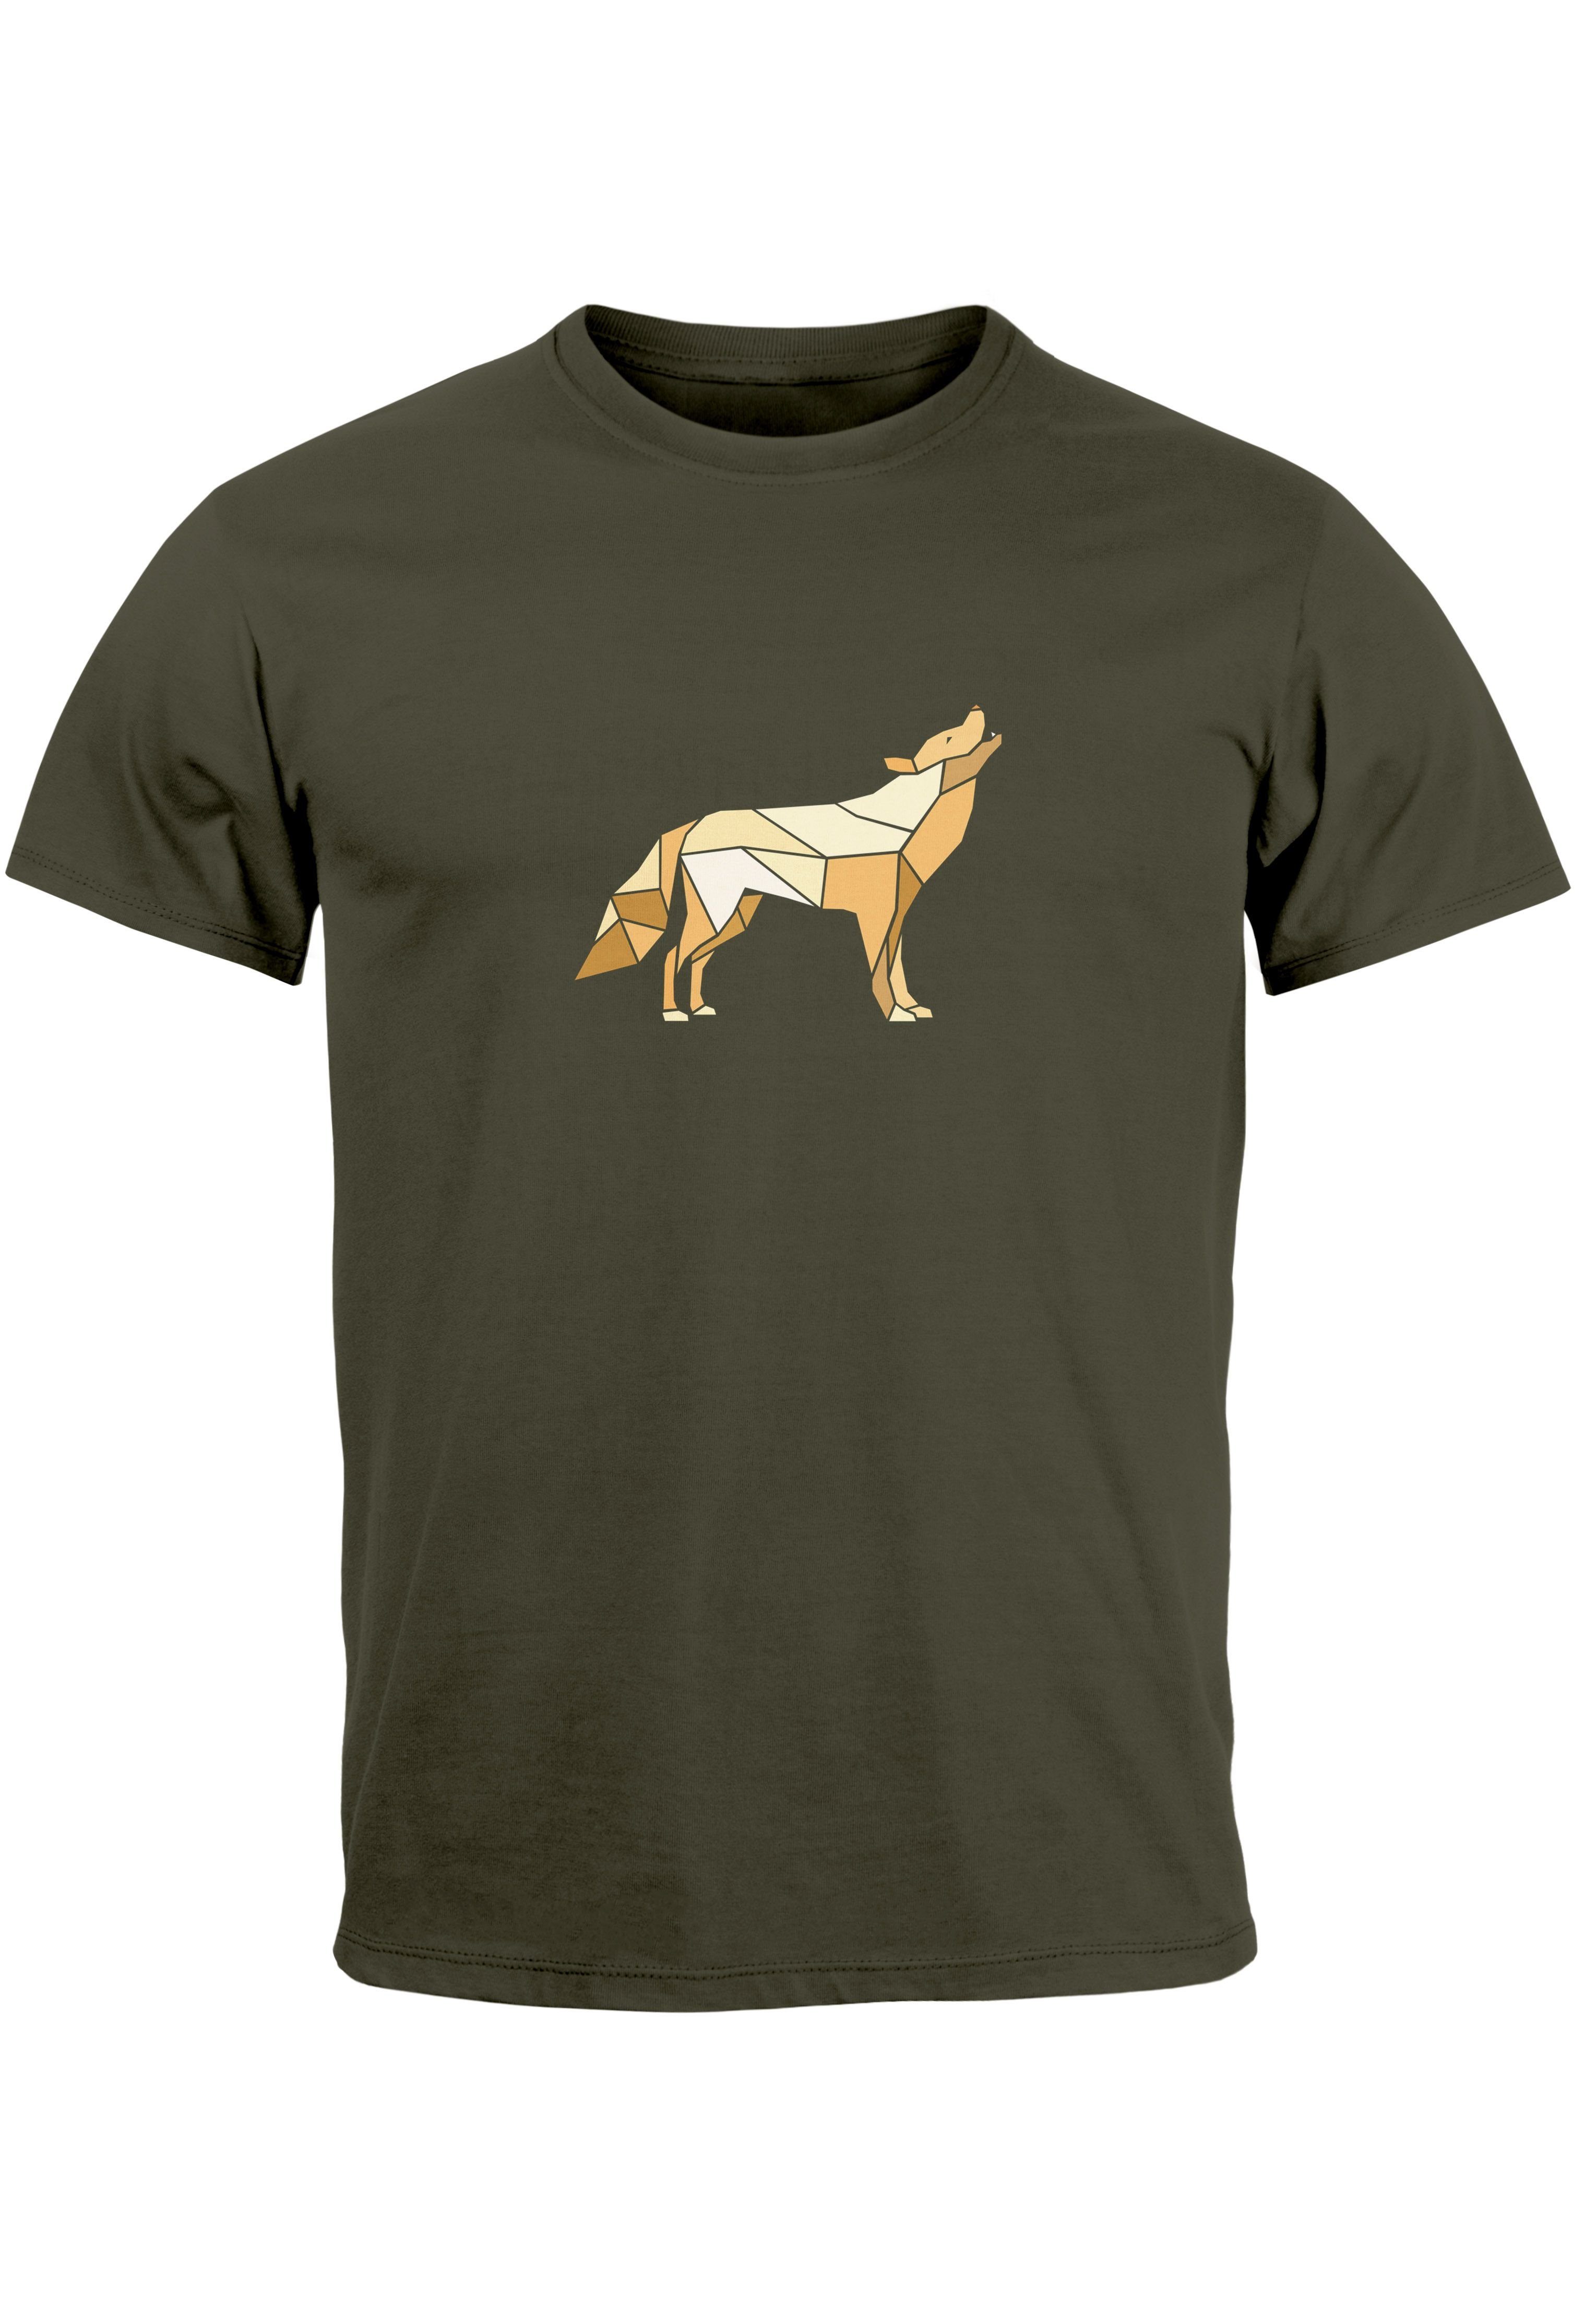 Neverless Print-Shirt Herren T-Shirt Bedruckt Polygon Grafik Wolf Outdoor Fashion Tiermotiv mit Print army